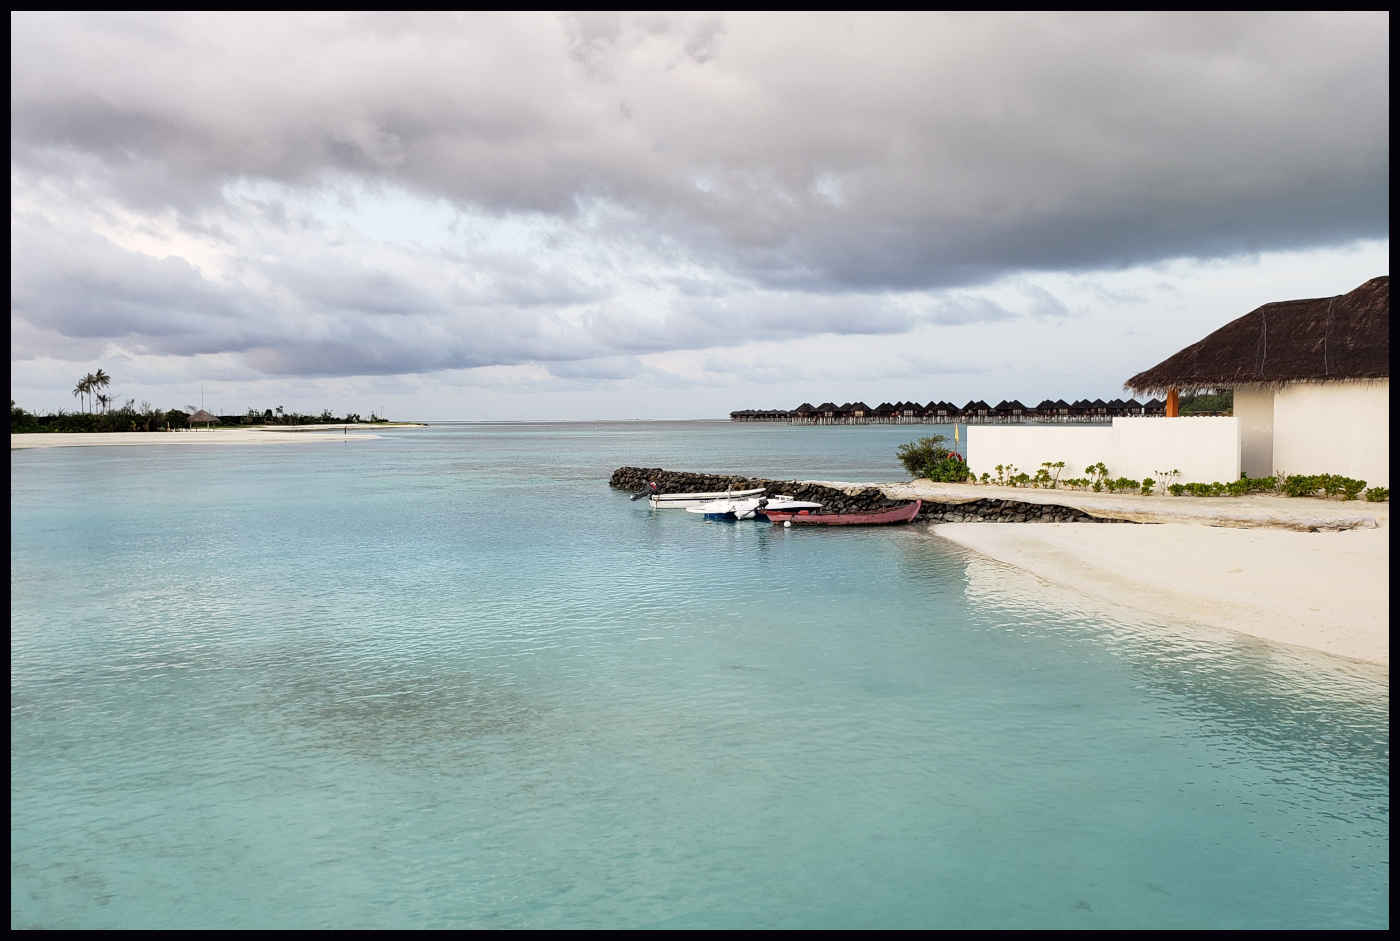 Olhuveli Beach & Spa Maldives